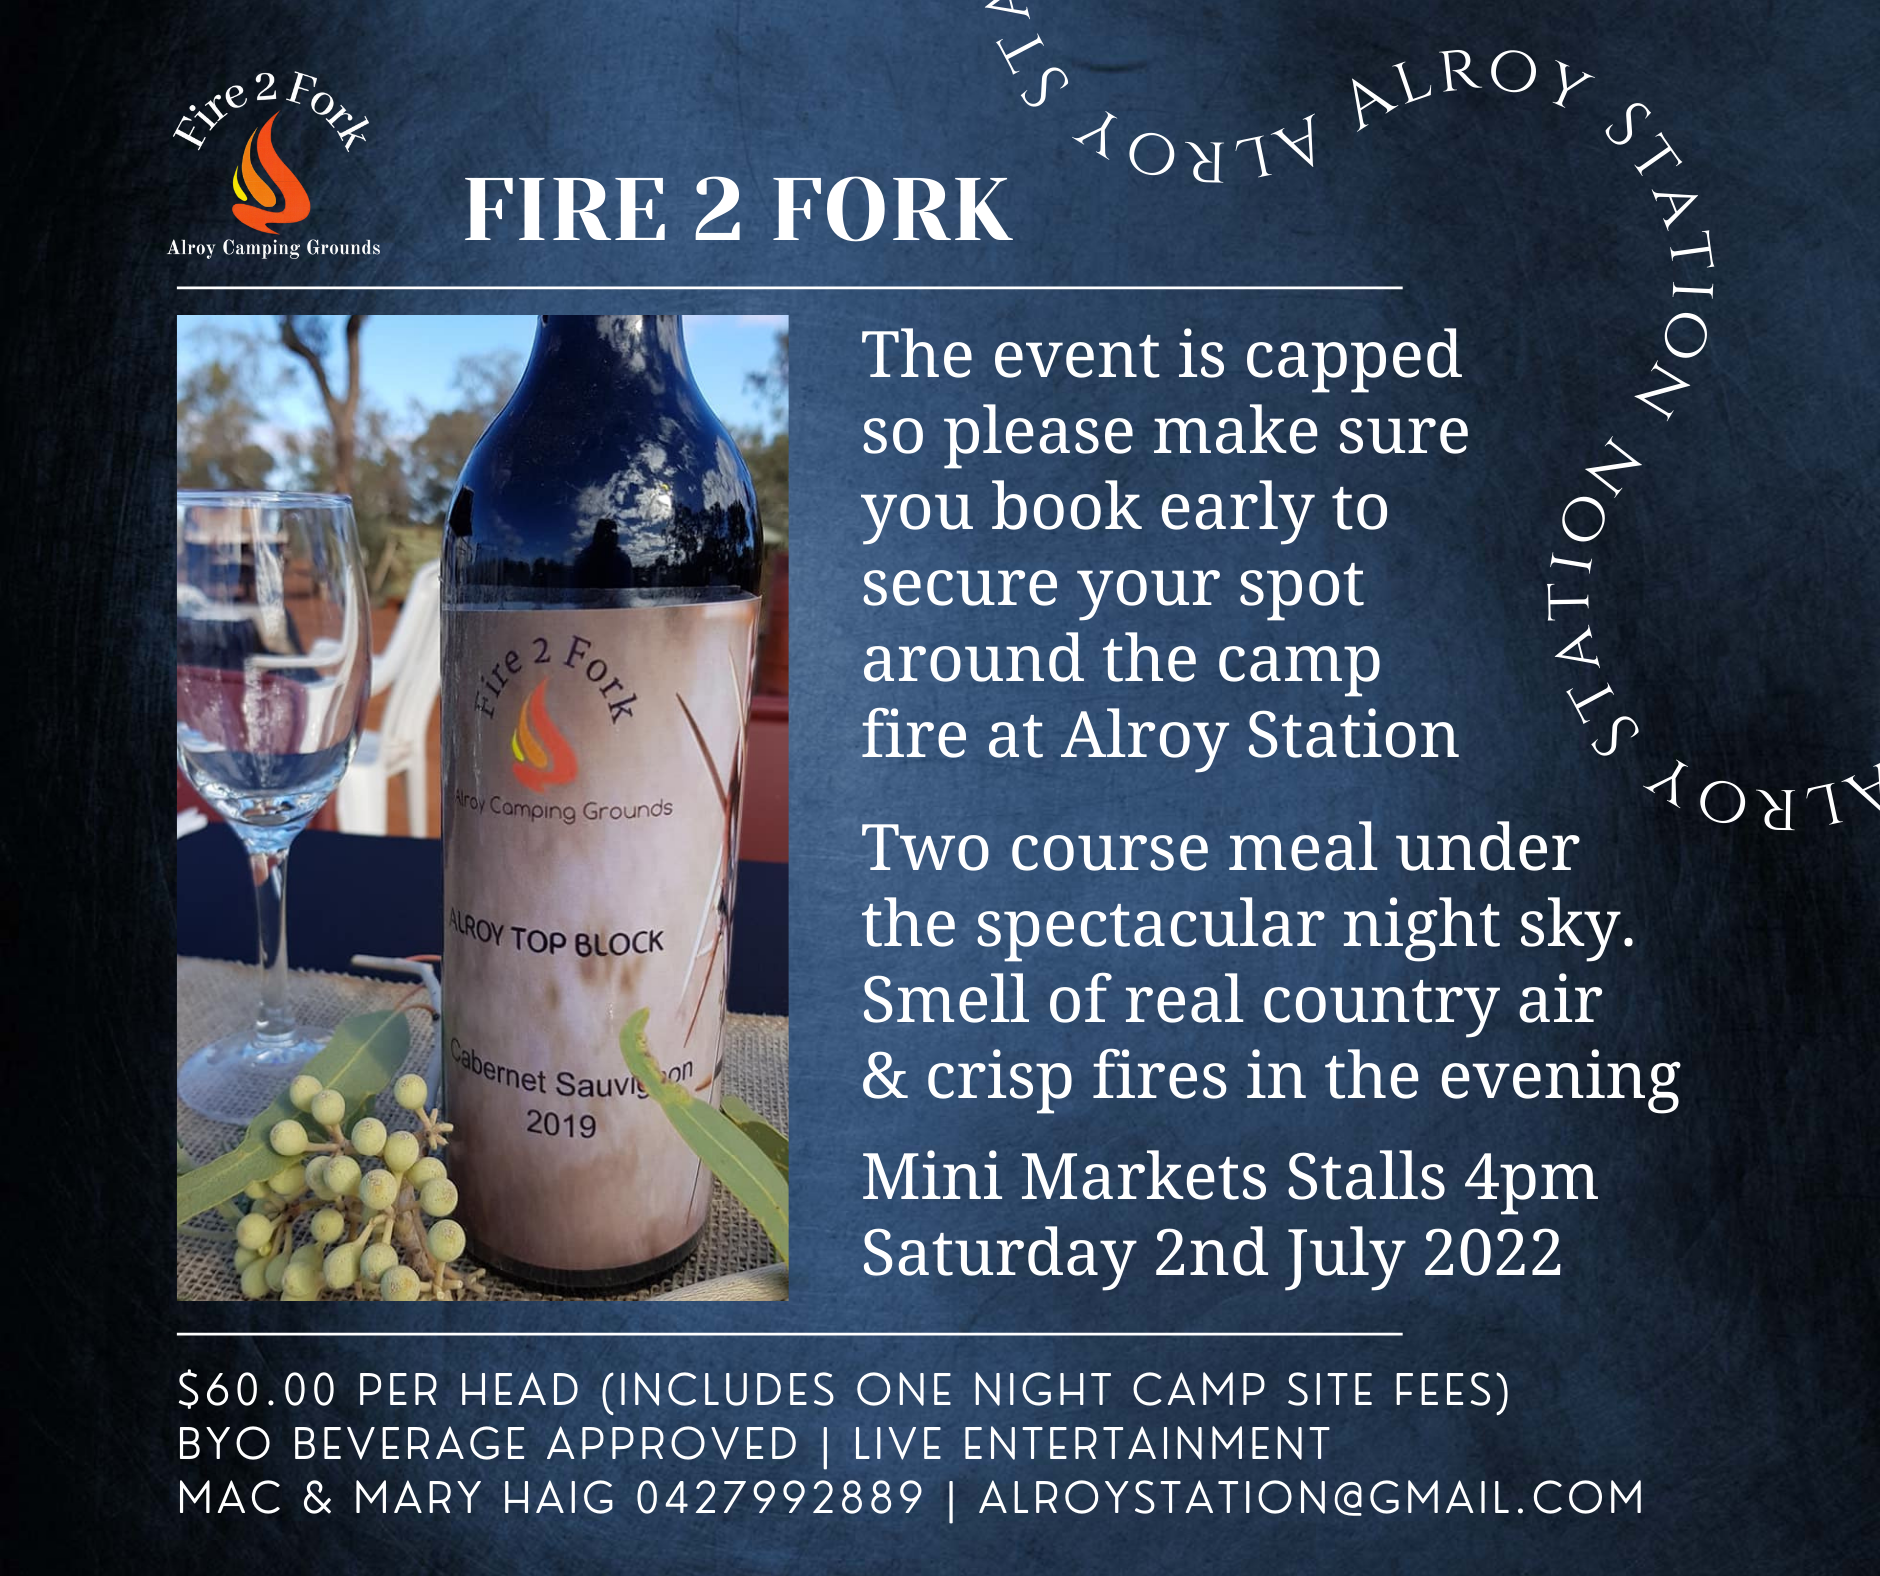 Alroy station fire 2 fork 